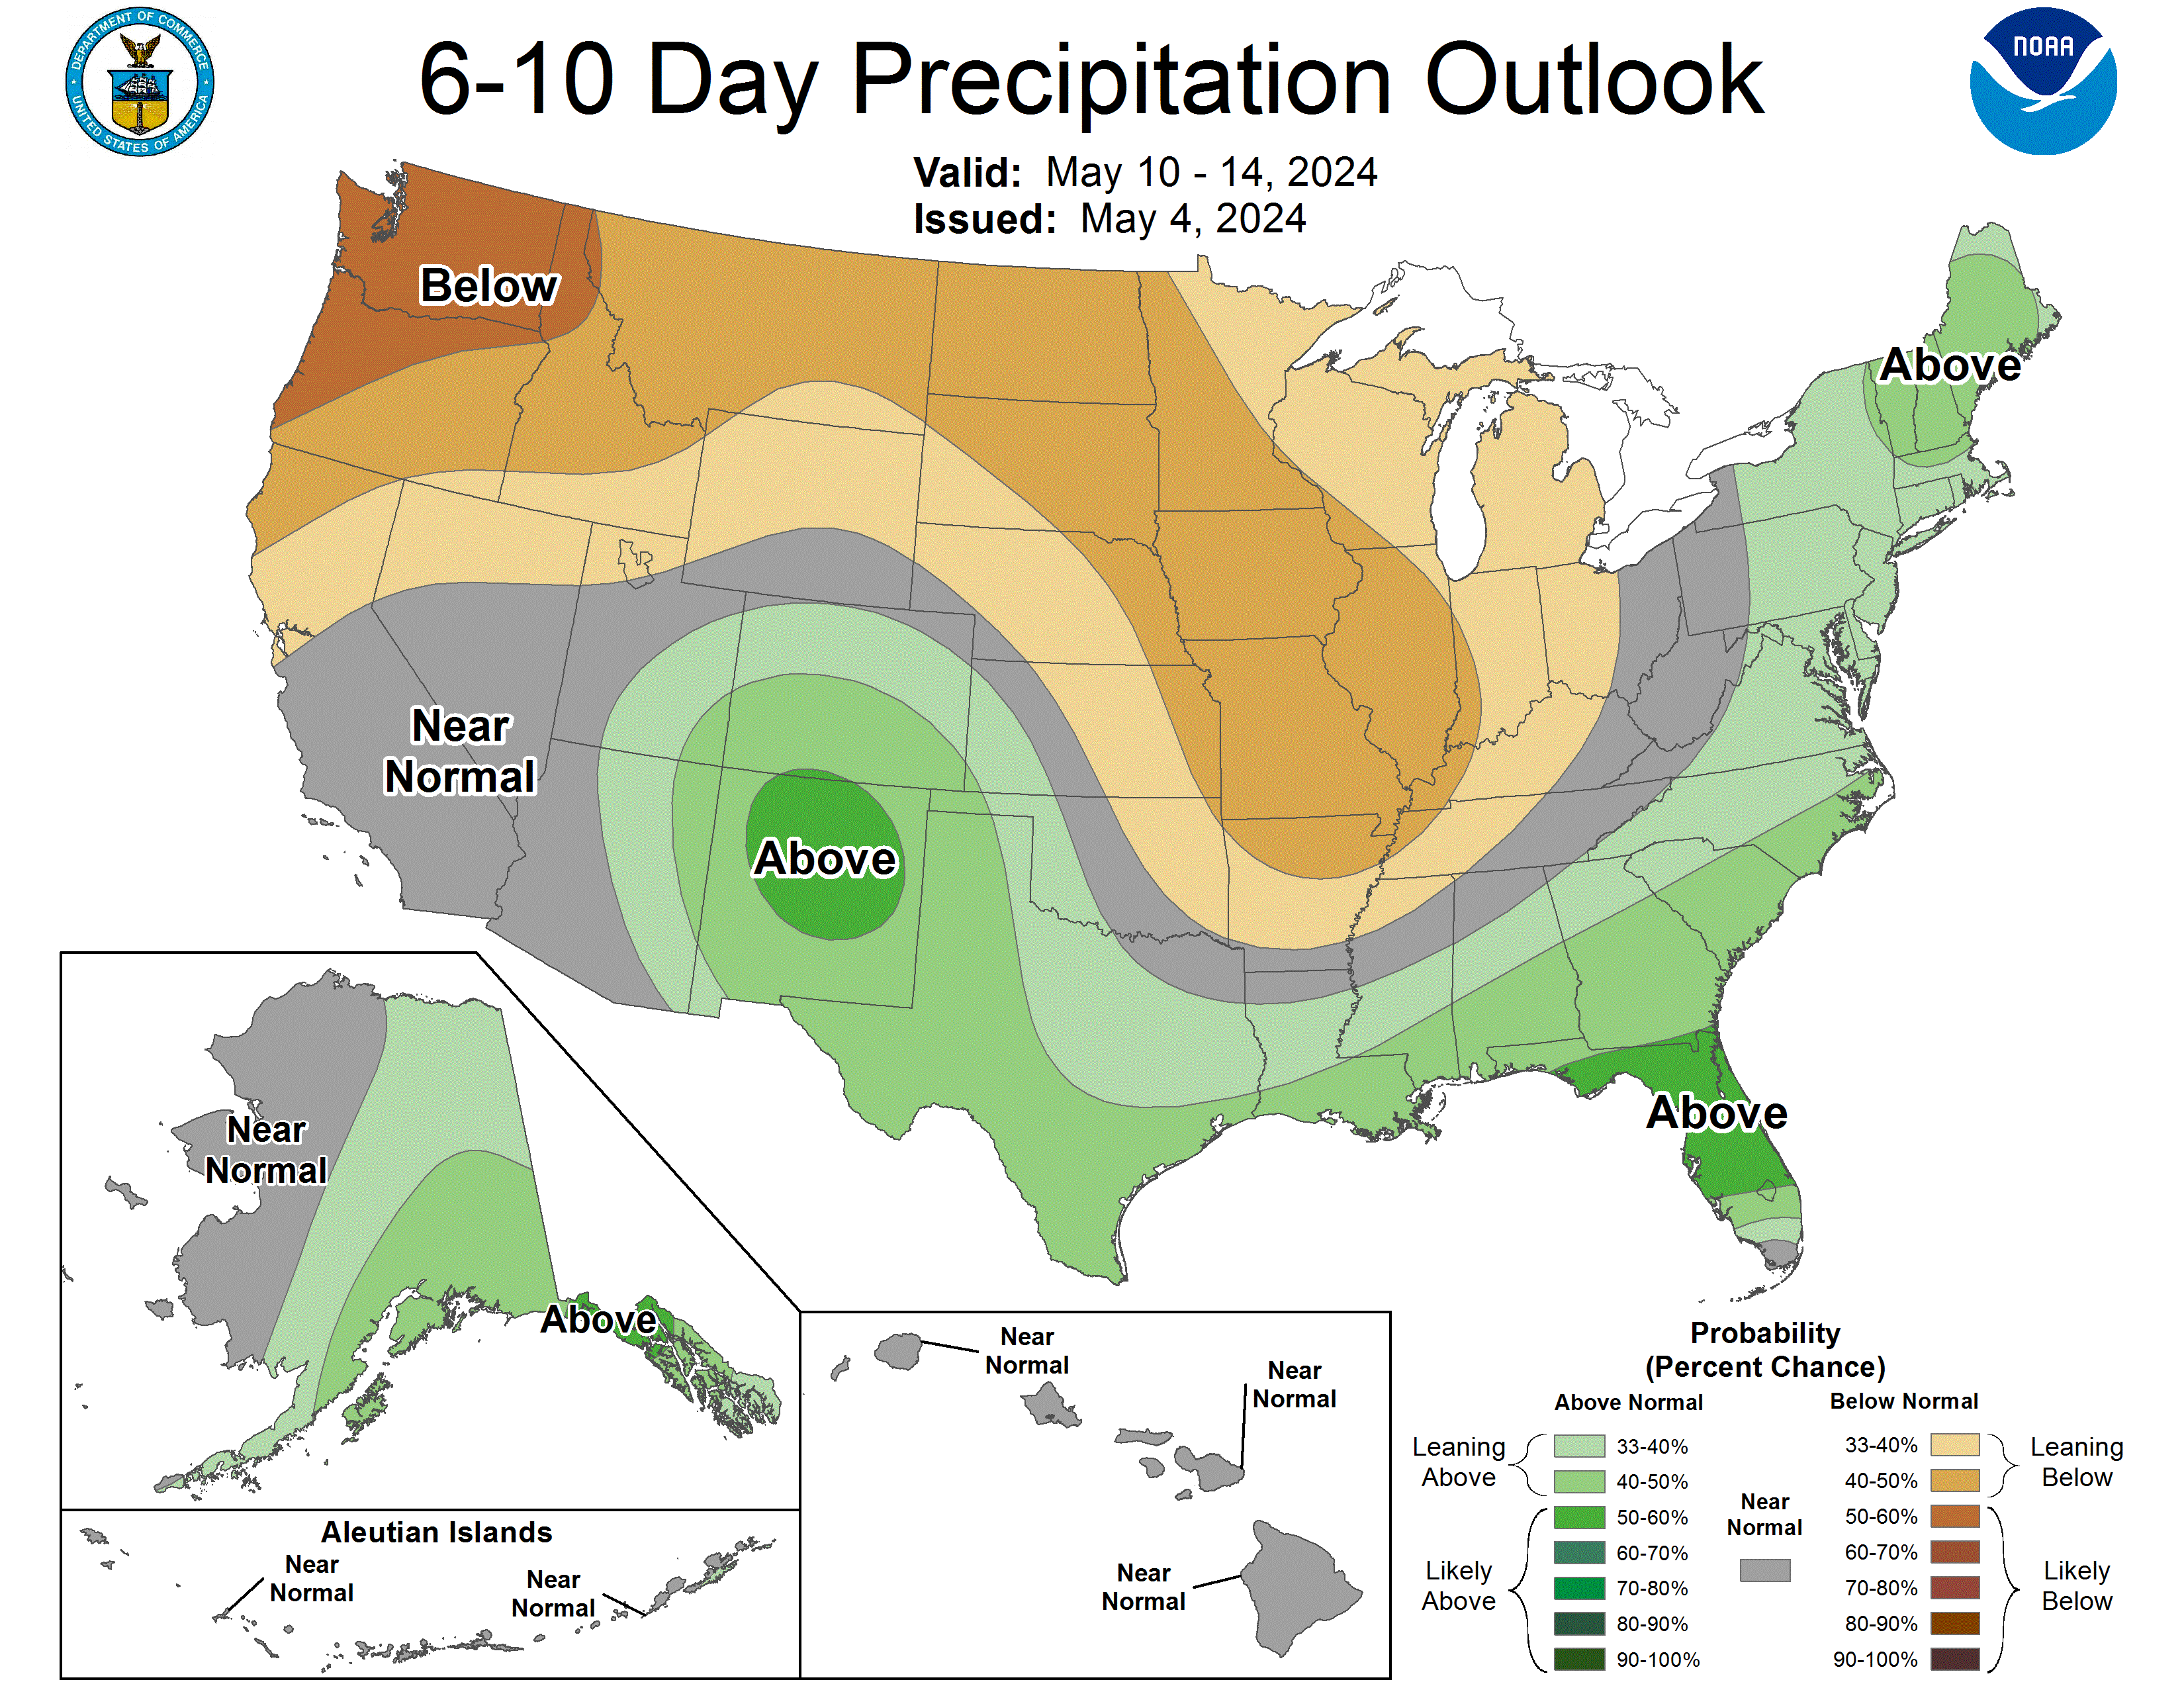 Days 6-10 Precipitation Outlook